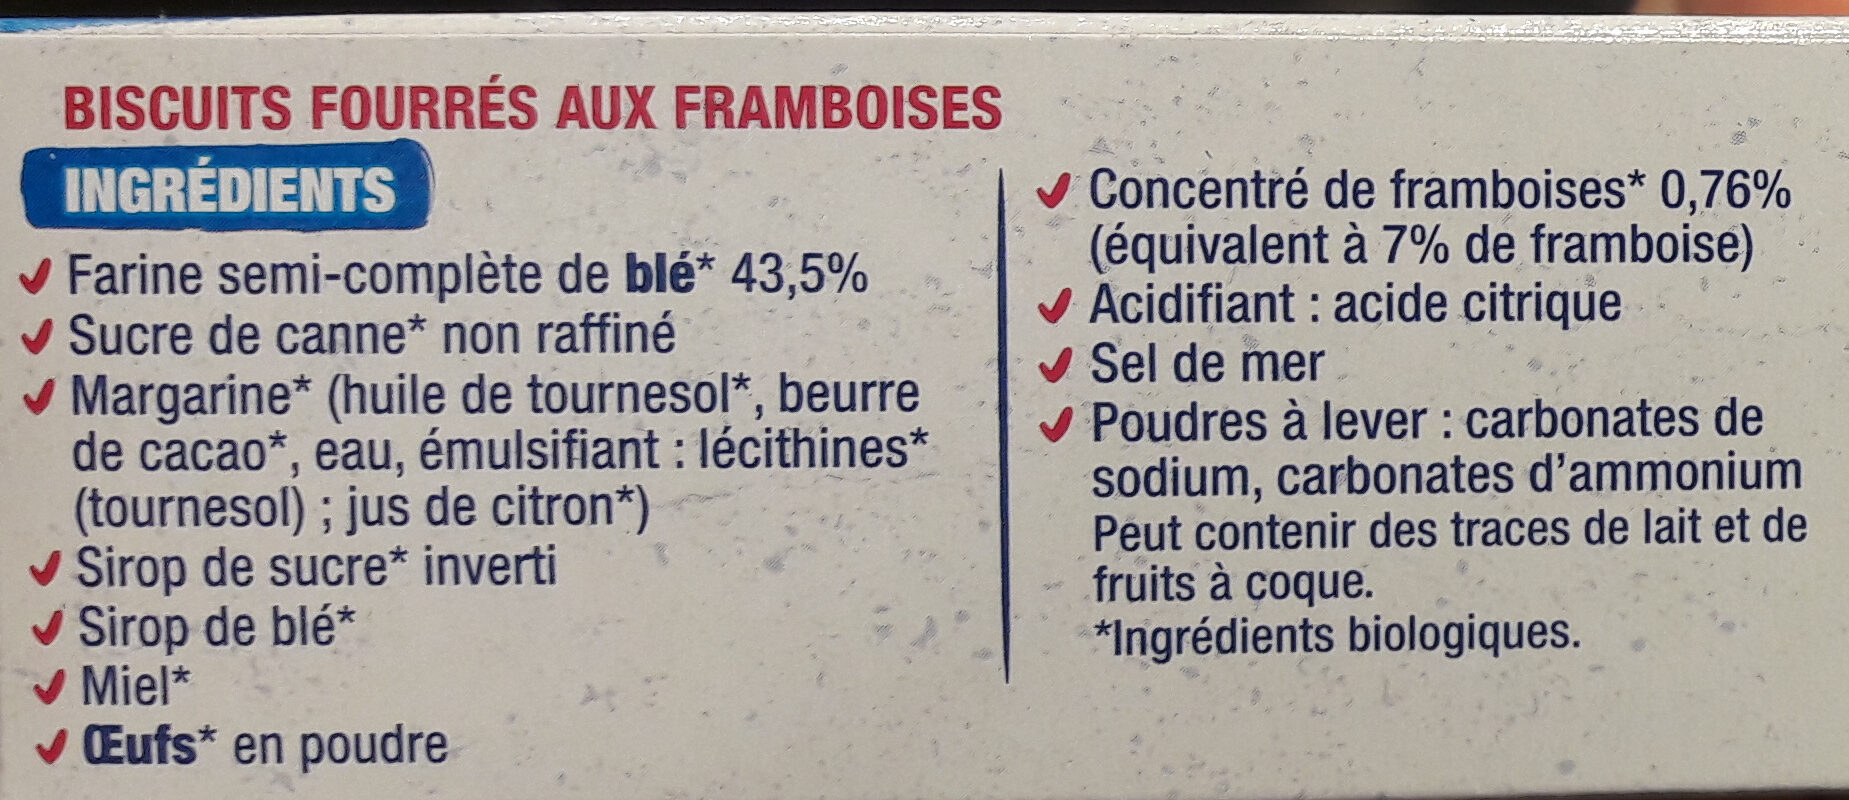 Fourrés framboise - مكونات - fr